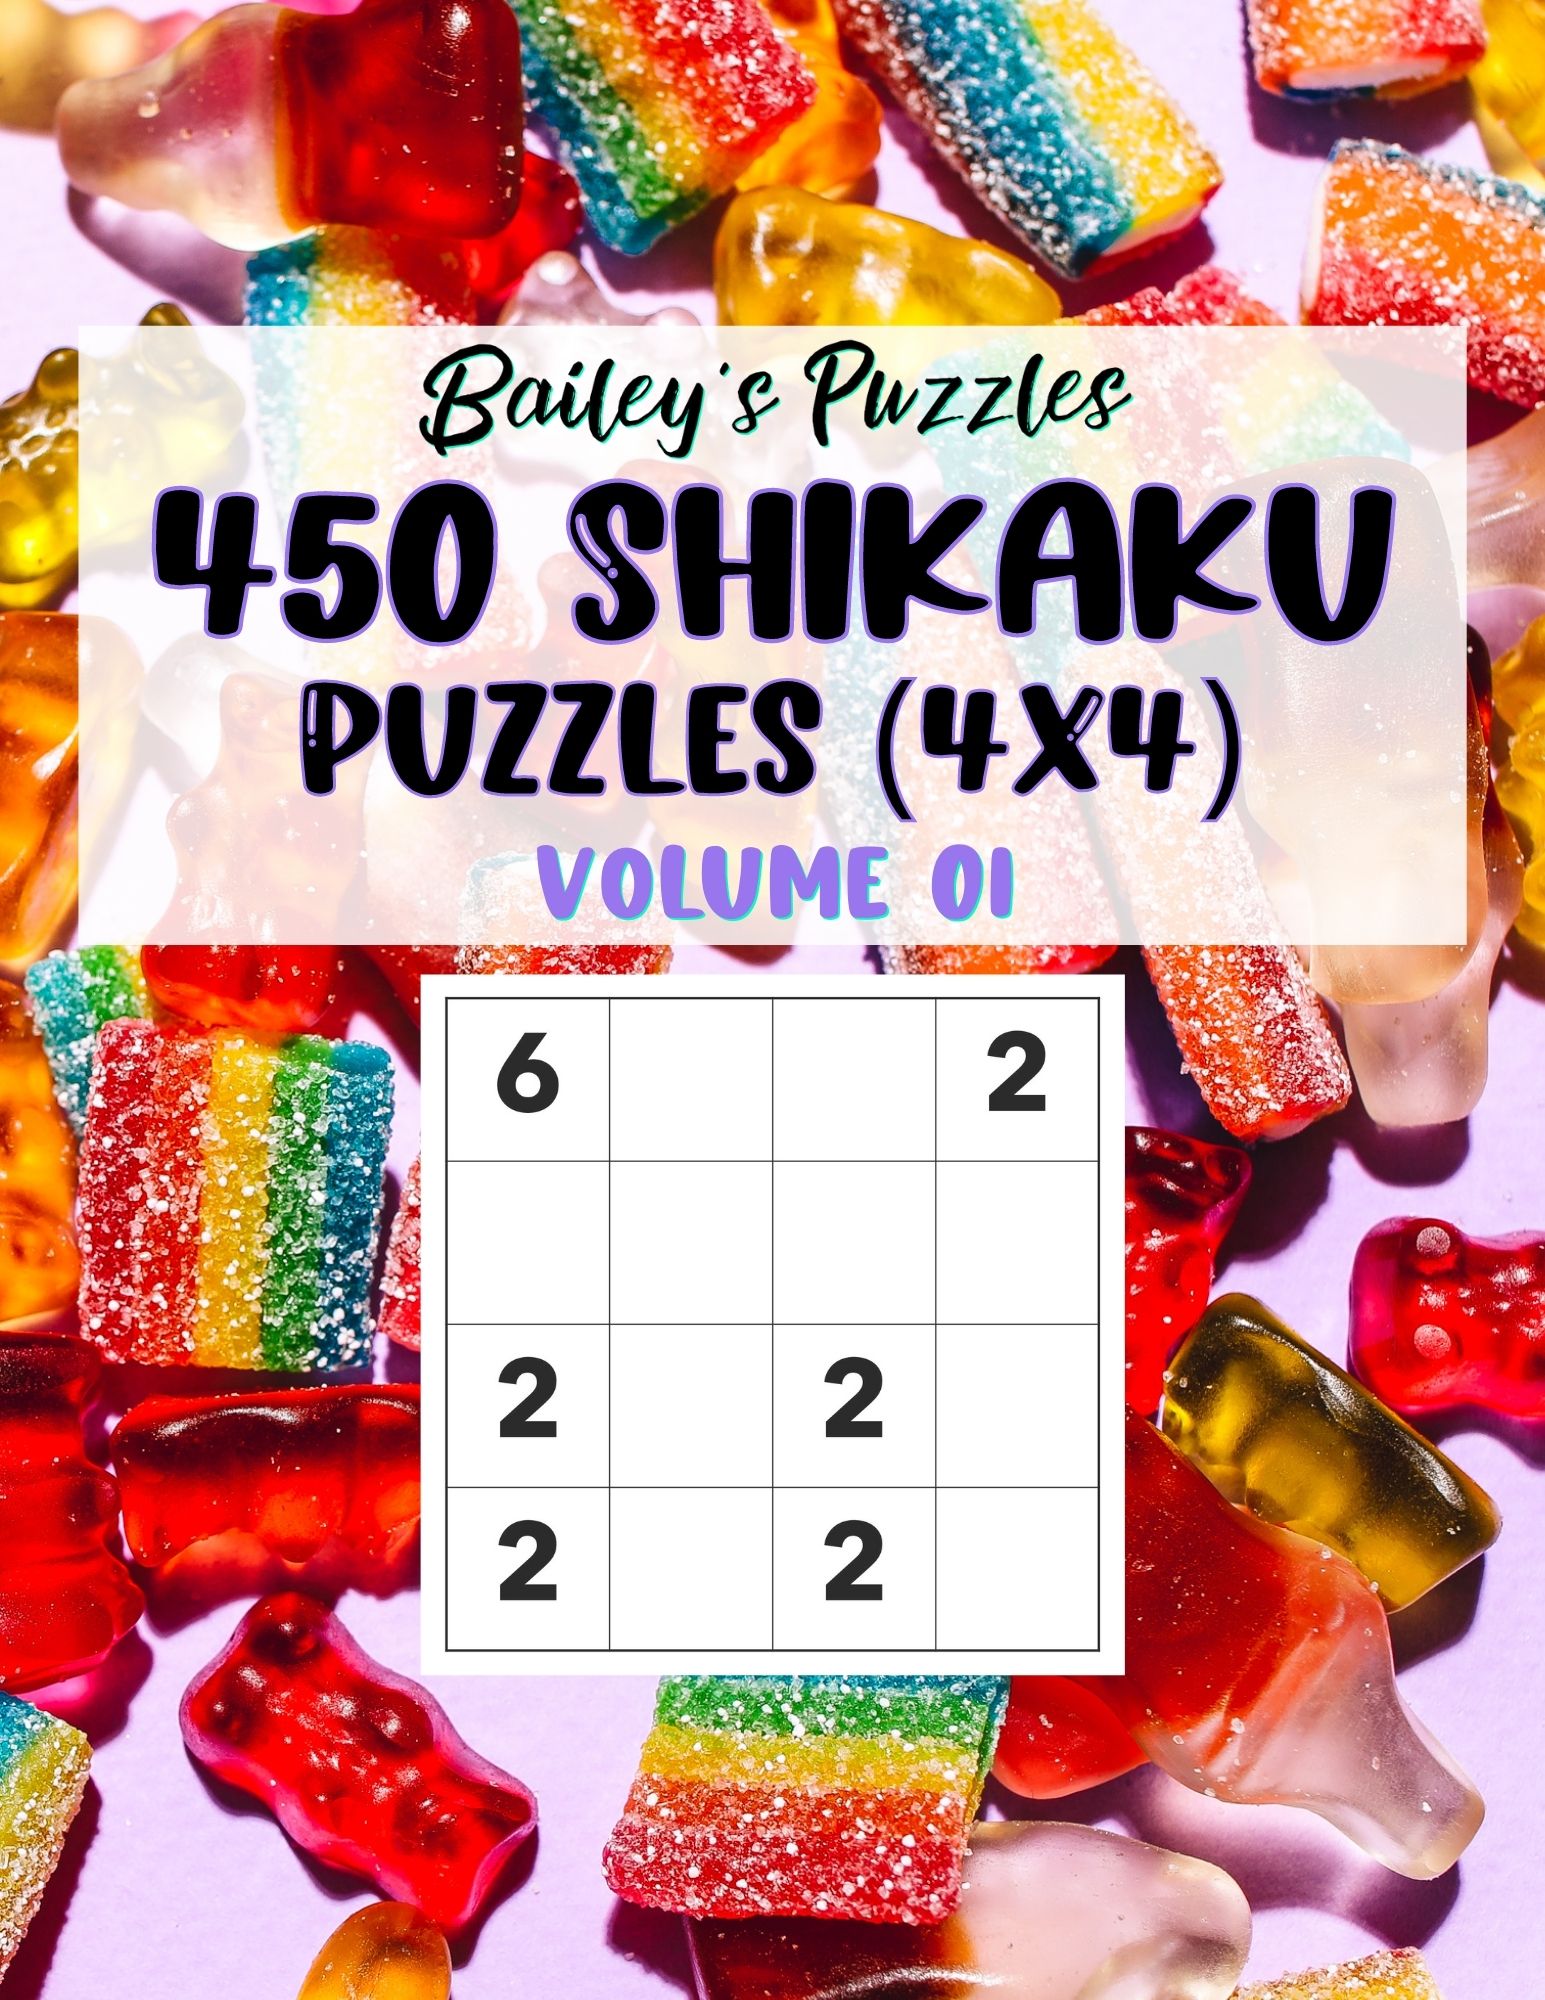 Front Cover - 450 Shikaku Puzzles (4x4)